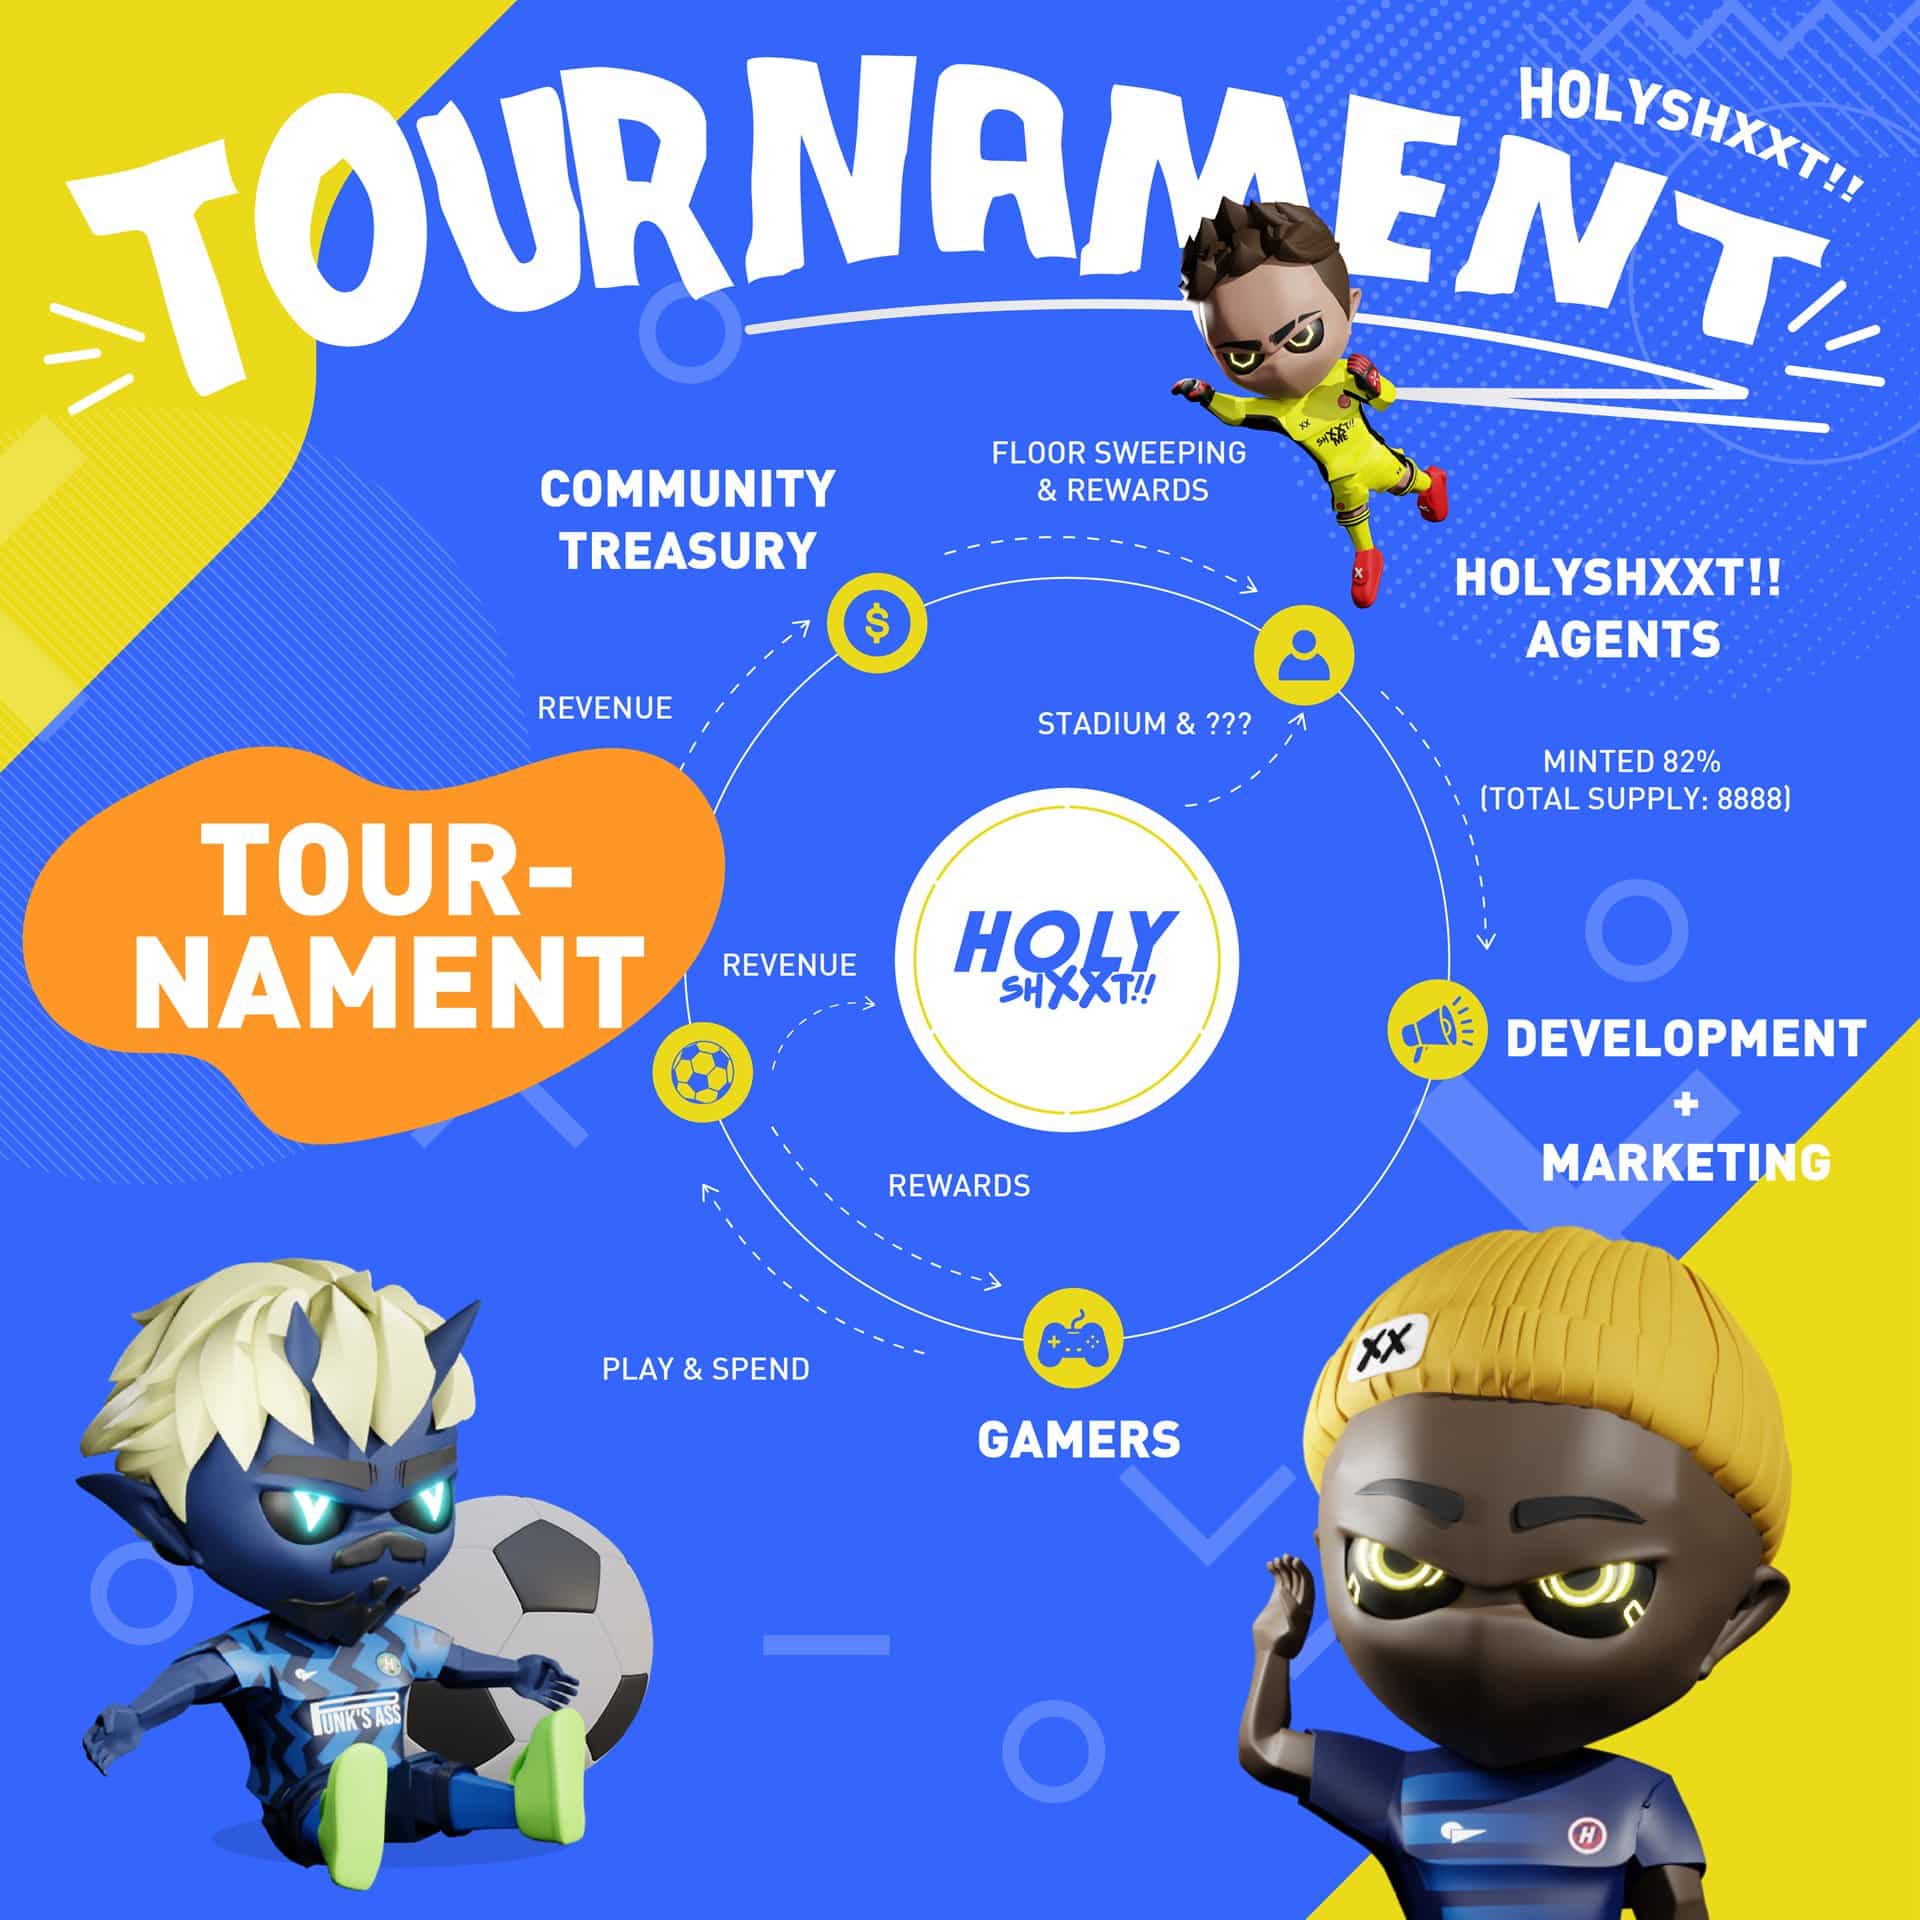 1014_tournament-1